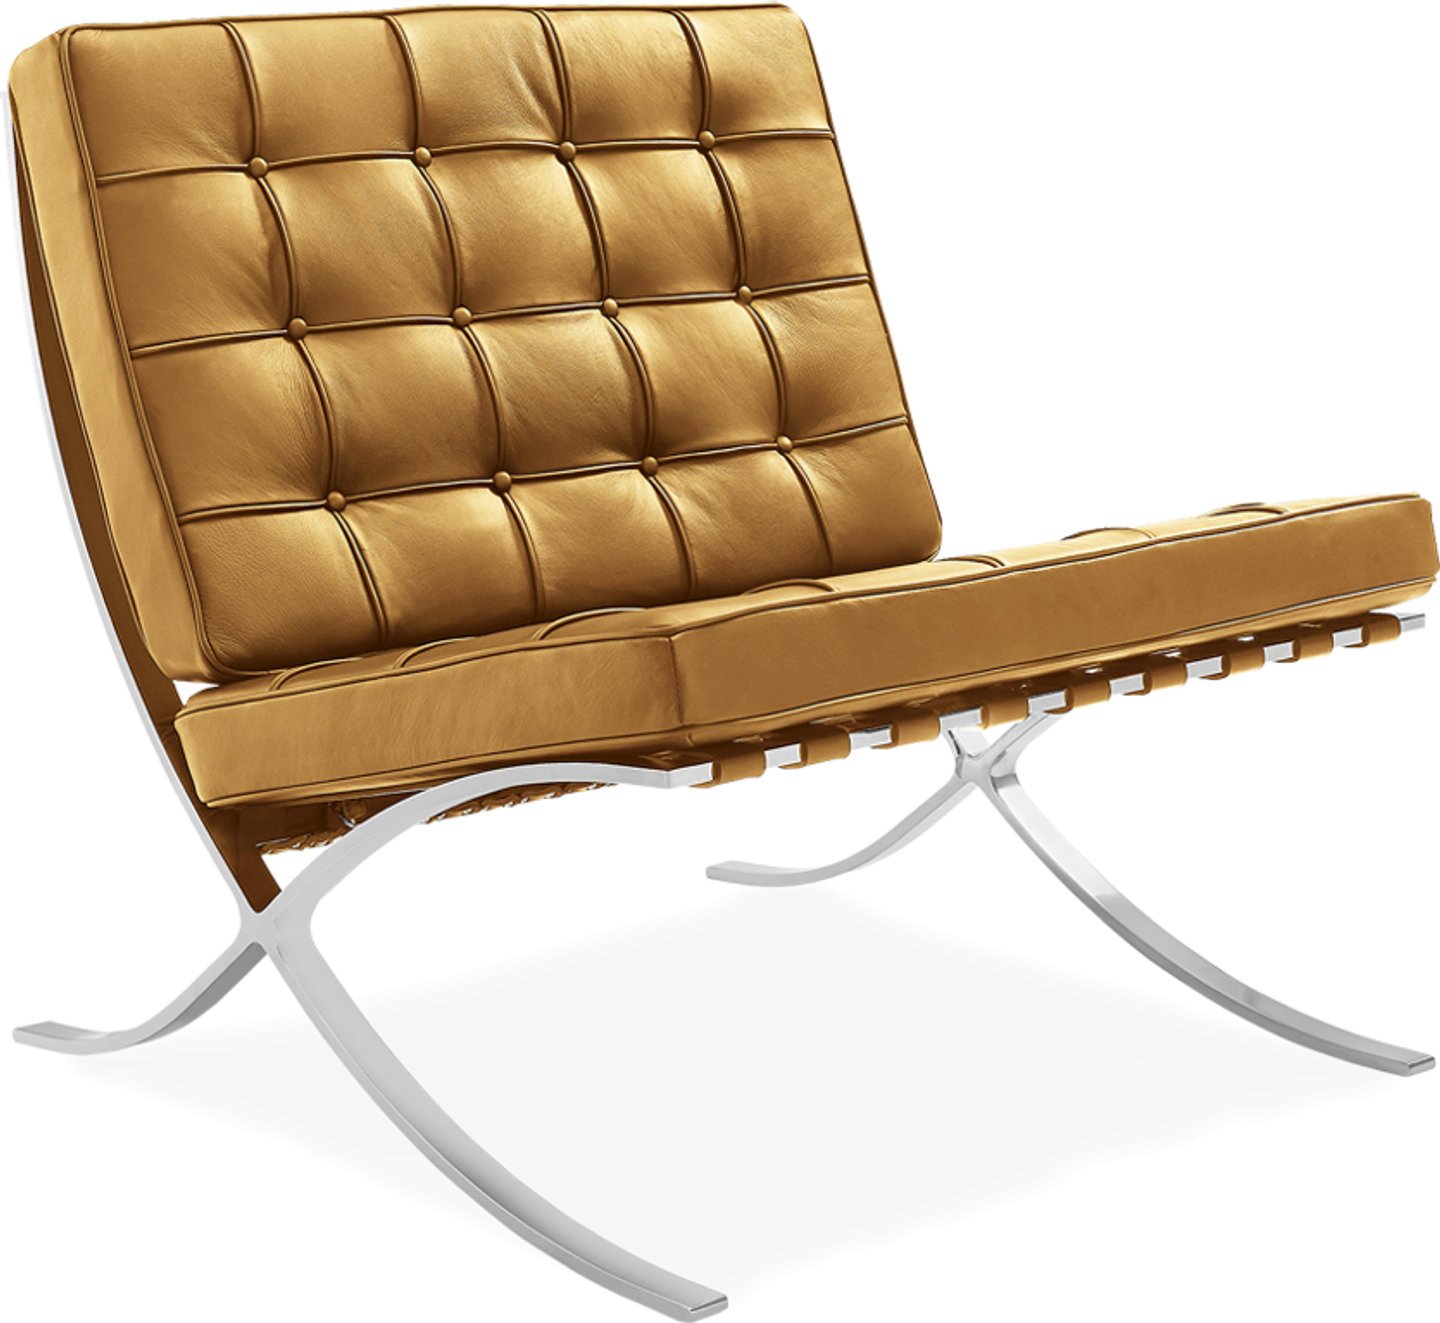 Barcelona Chair Italian Leather/Terracota image.